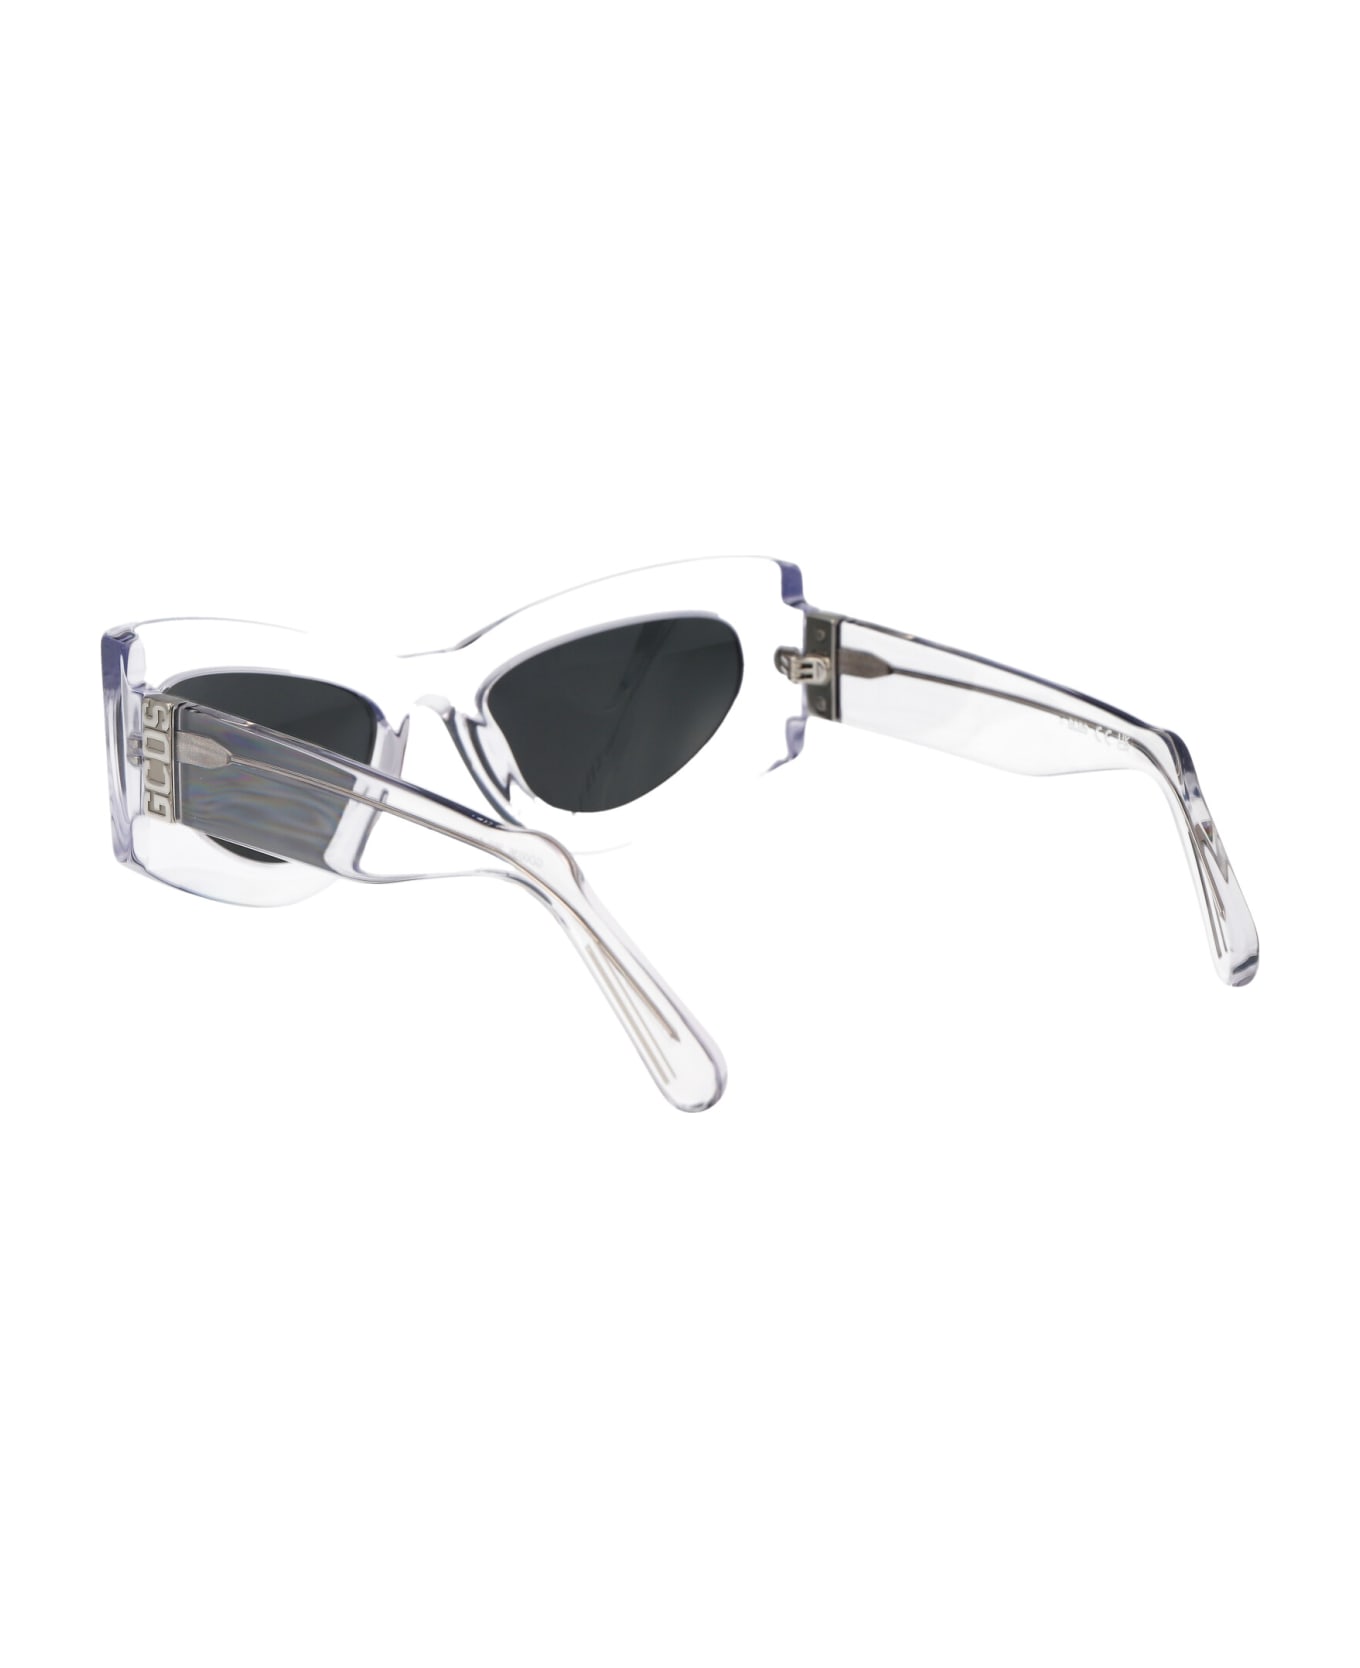 GCDS Gd0036 Sunglasses - 26C CRYSTAL